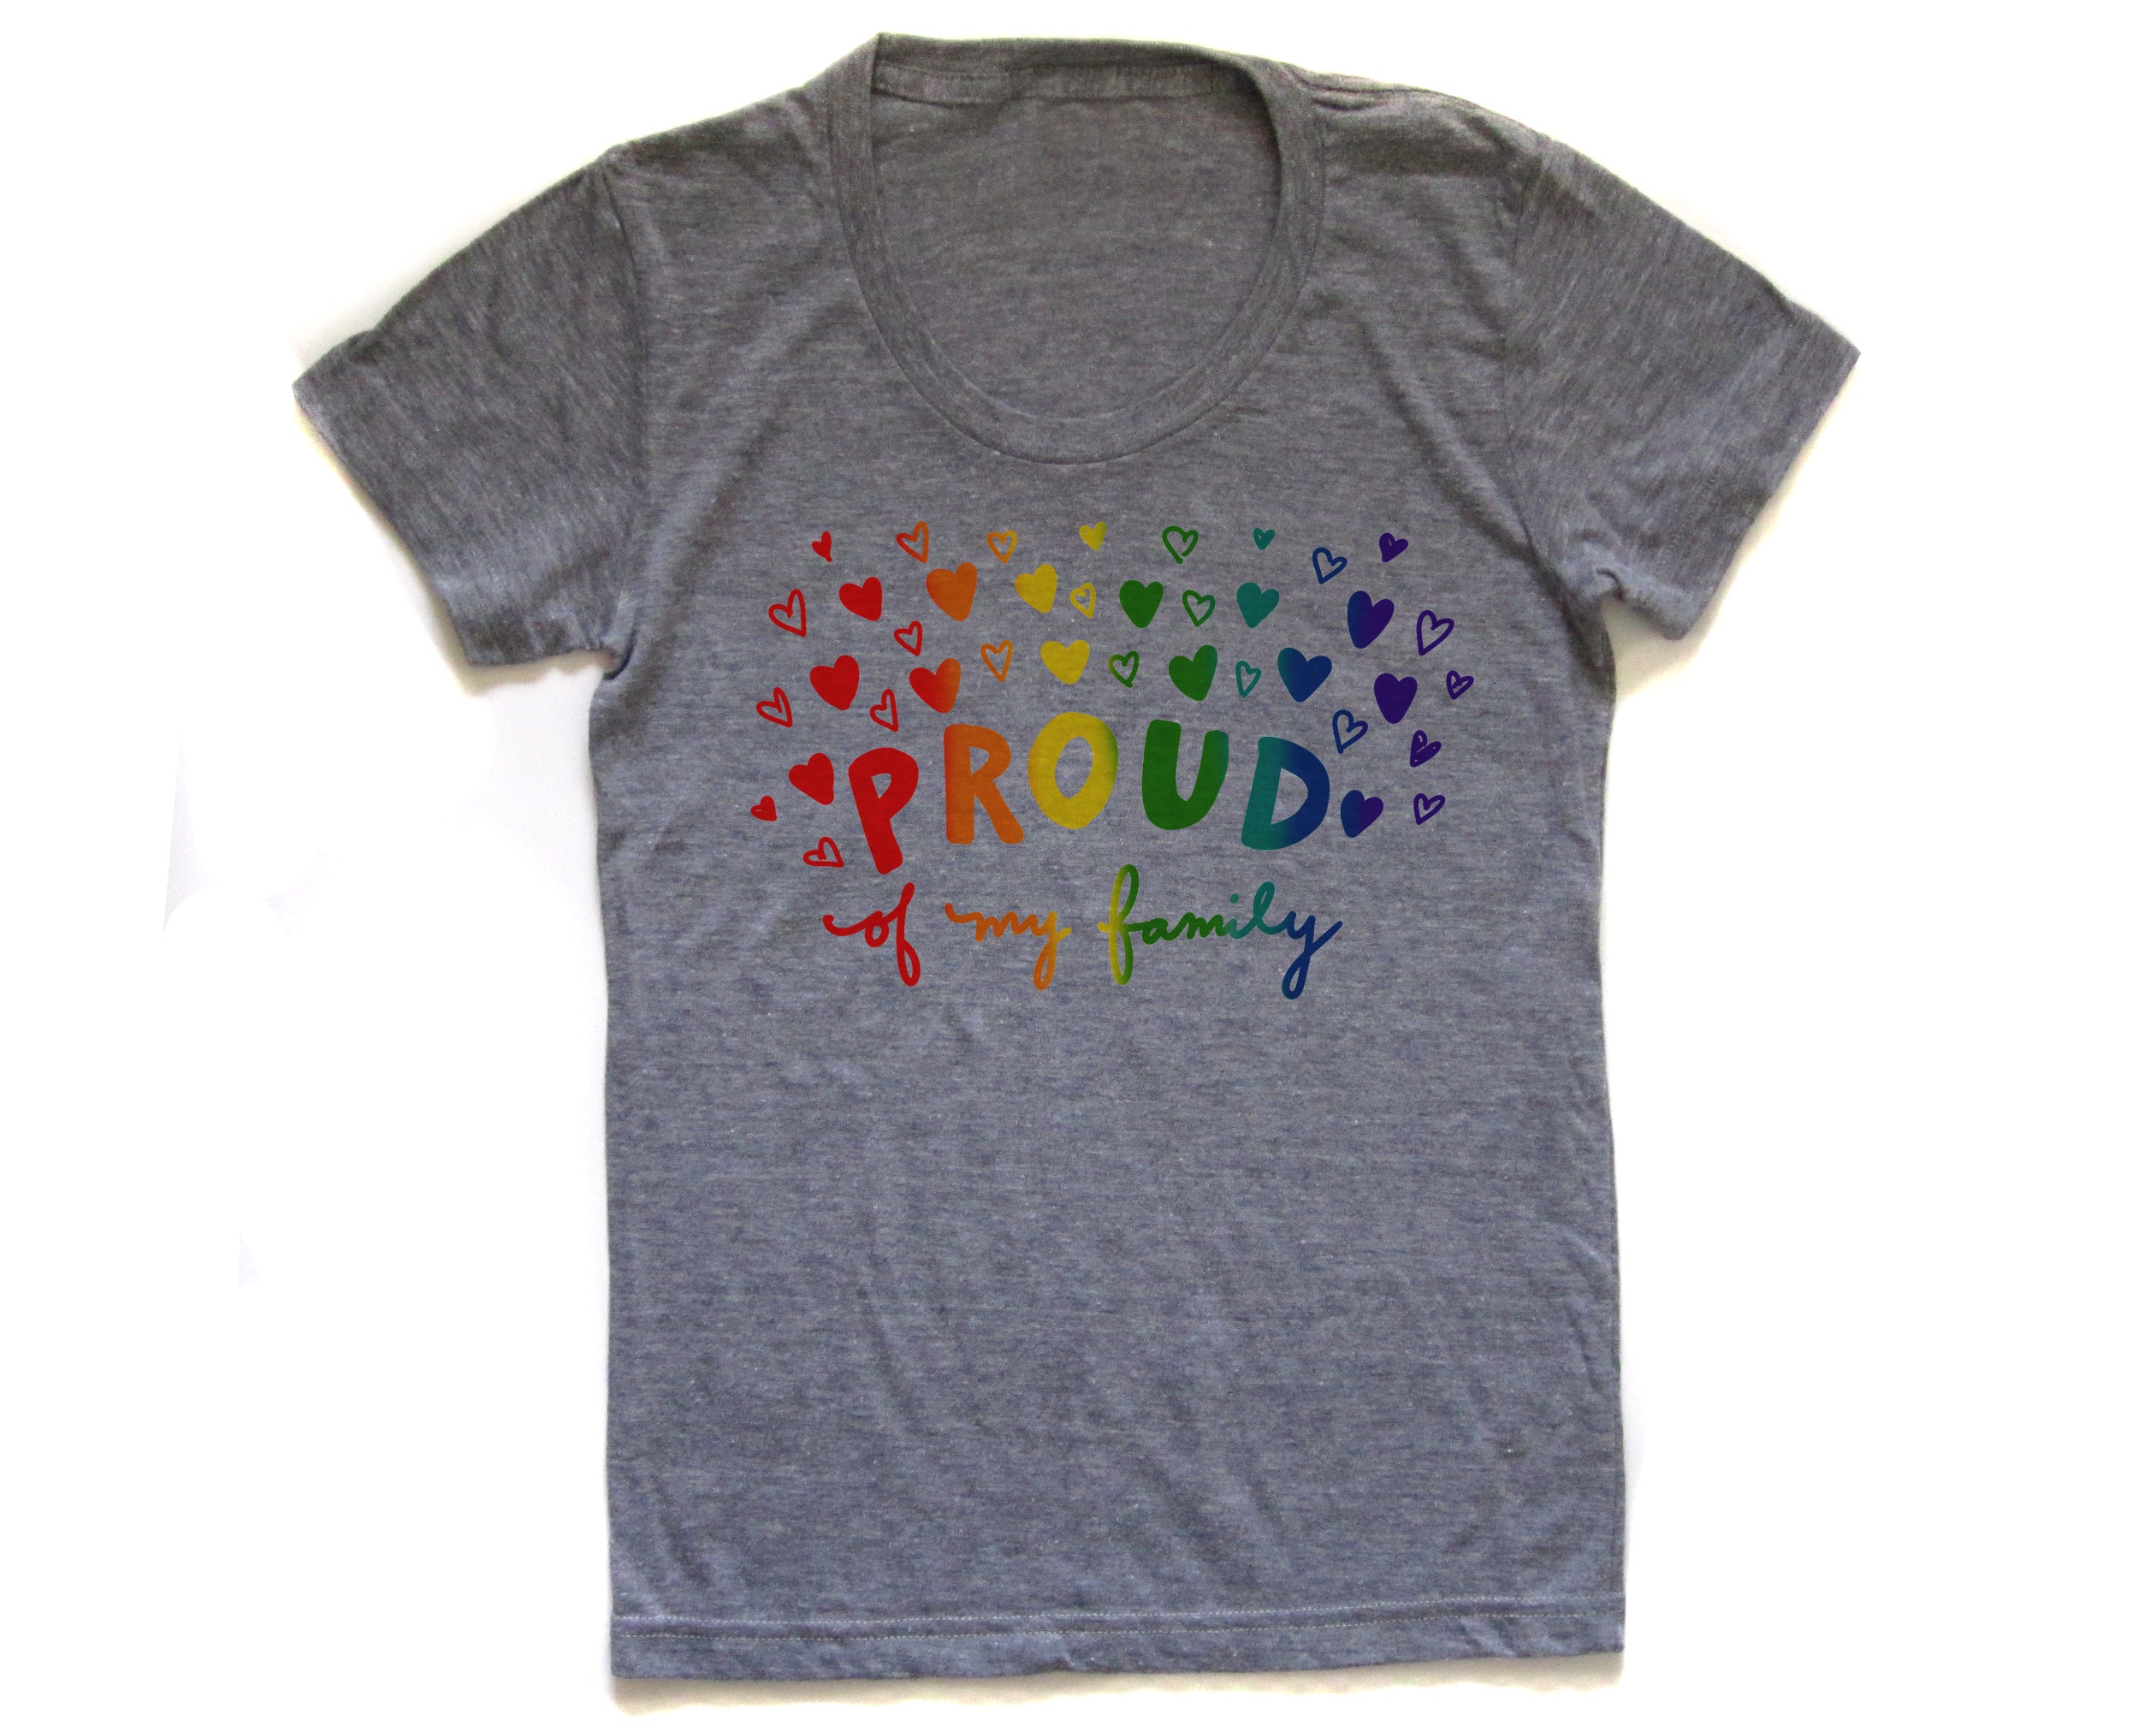 Proud of my family : Unisex Tee, Pride, LGBTQIA, Rainbow Free Shipping